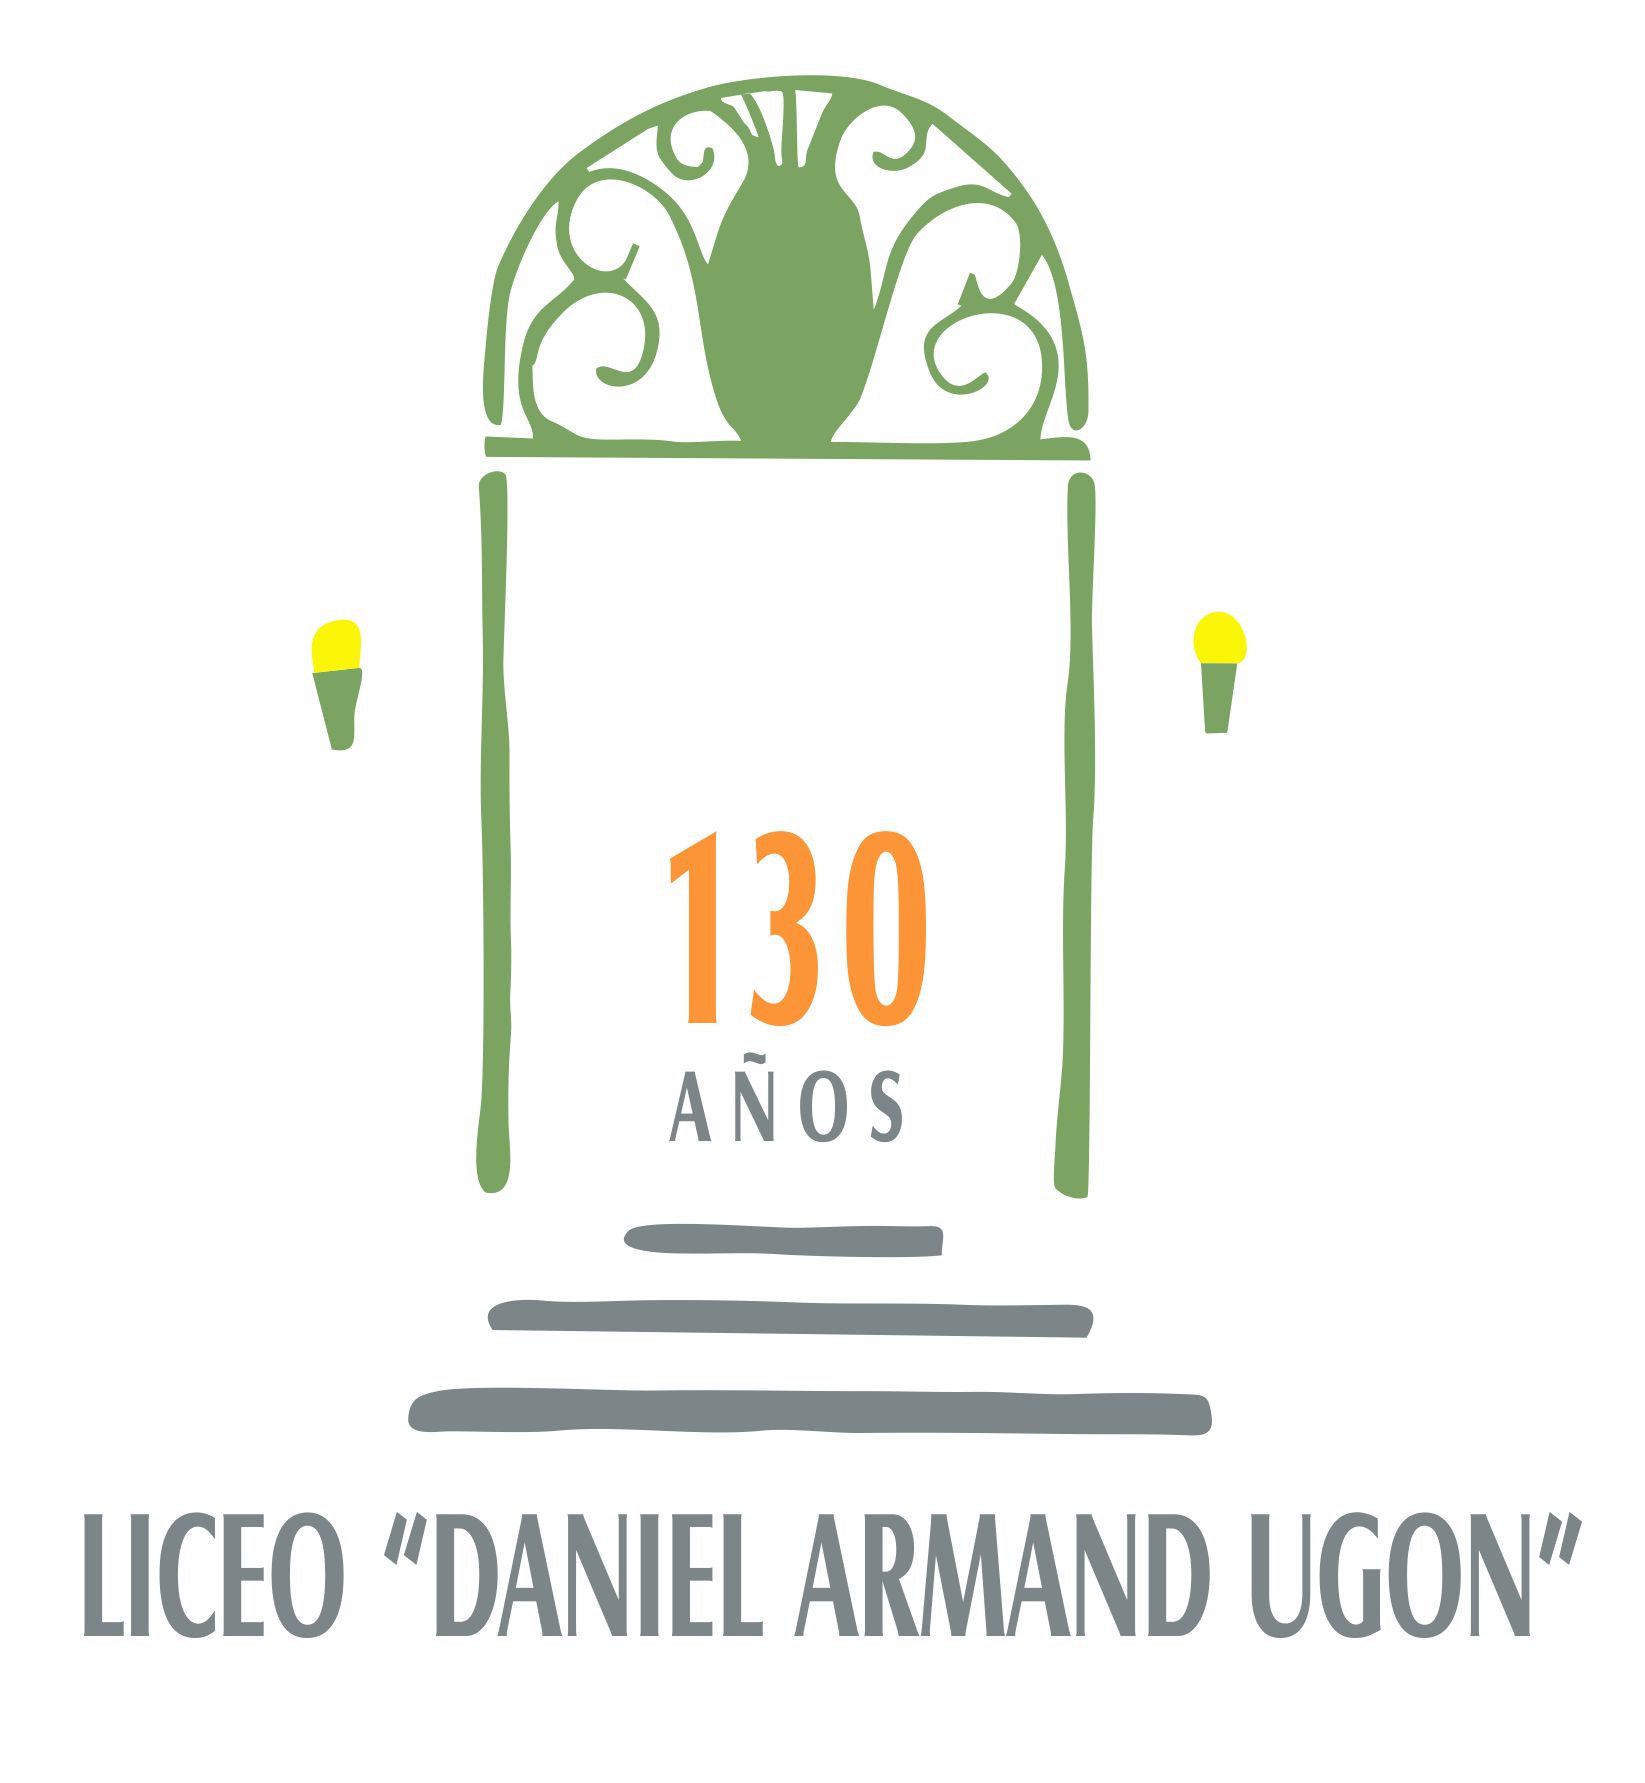 Liceo Daniel Armand Ugon